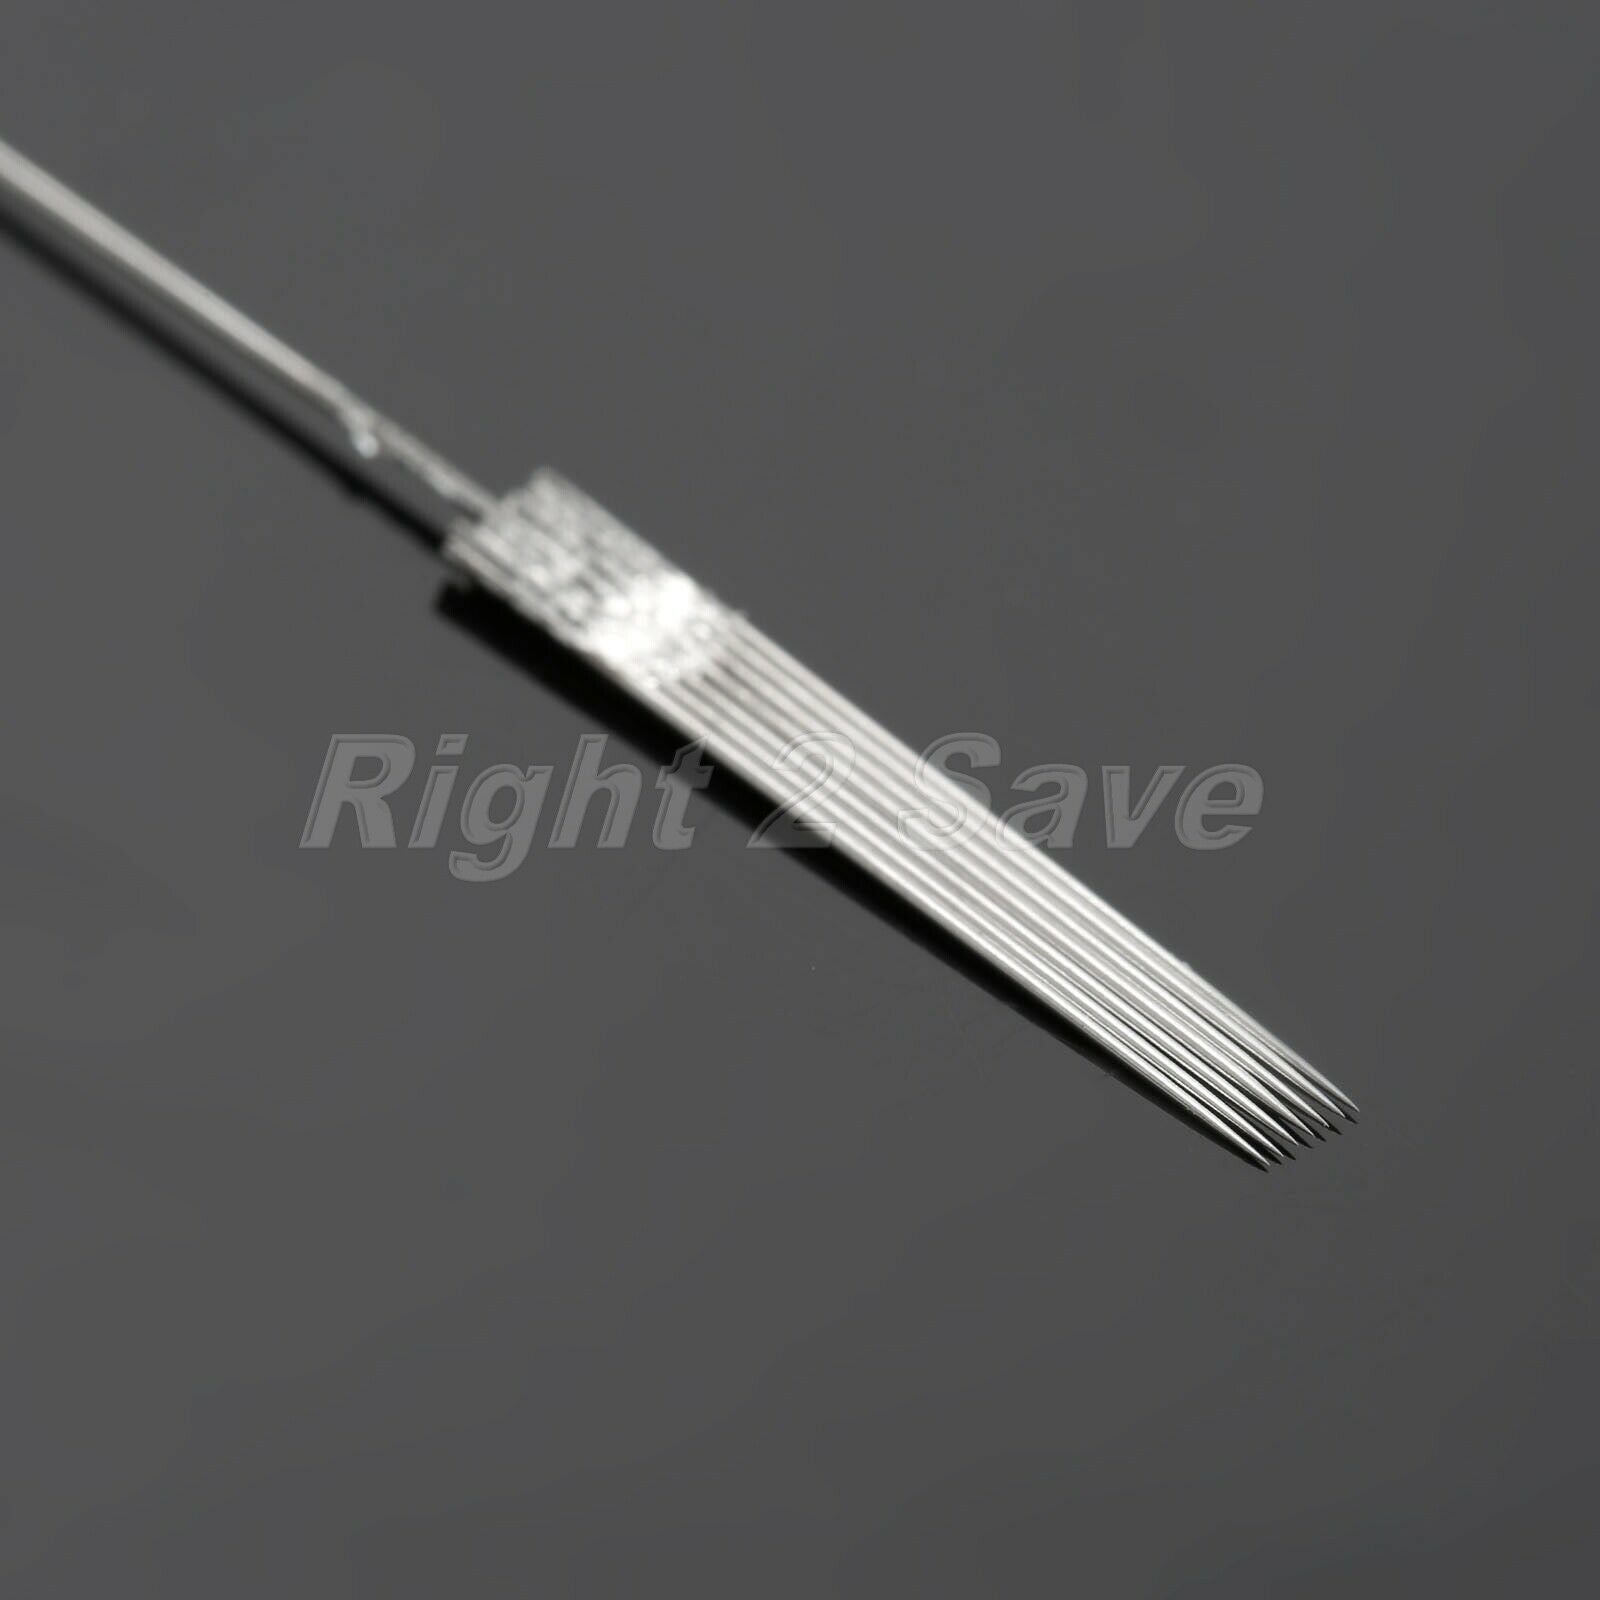 100pc 7F 1.95" Length 7 Pin Blade Needles Permanent Makeup Eyebrow Tattoo Needle